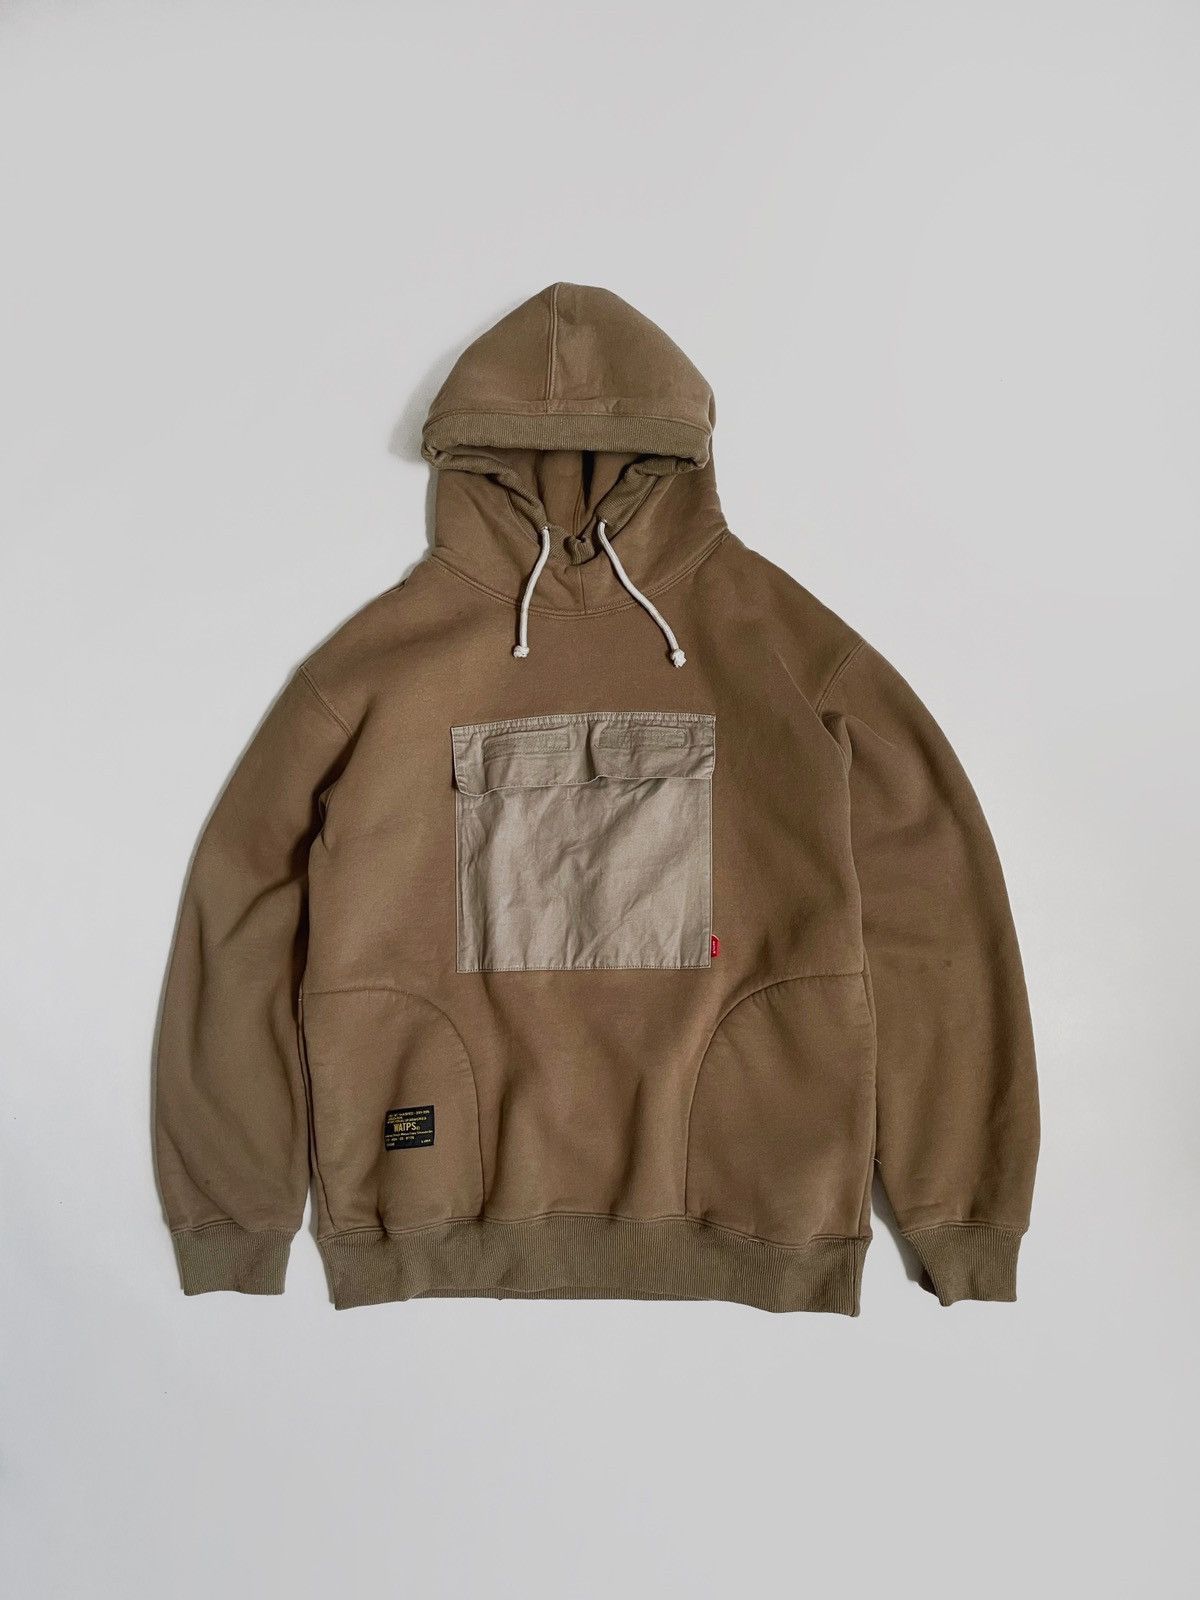 Wtaps Wtaps pocket hoodie | Grailed